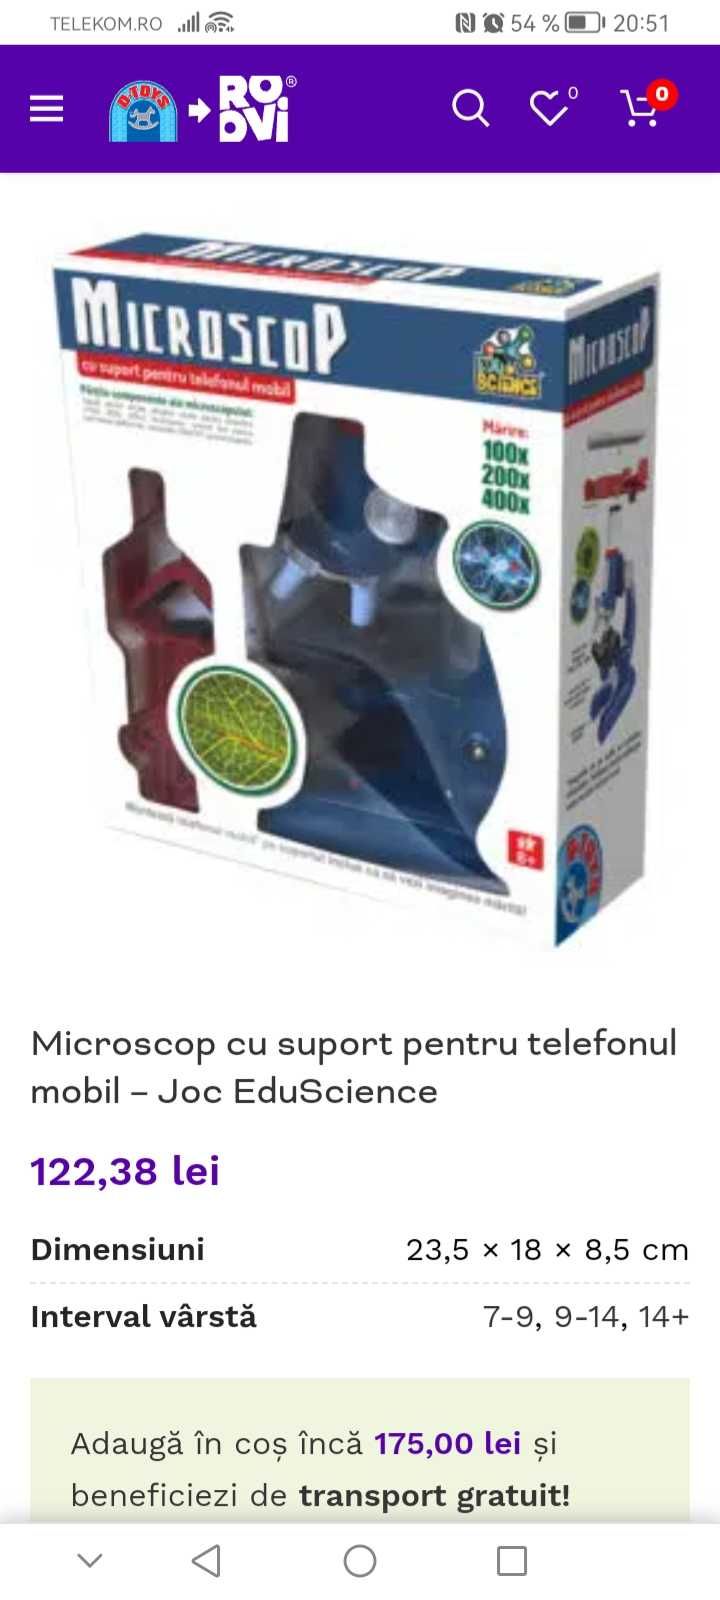 Vând microscop educational, 8+ ani